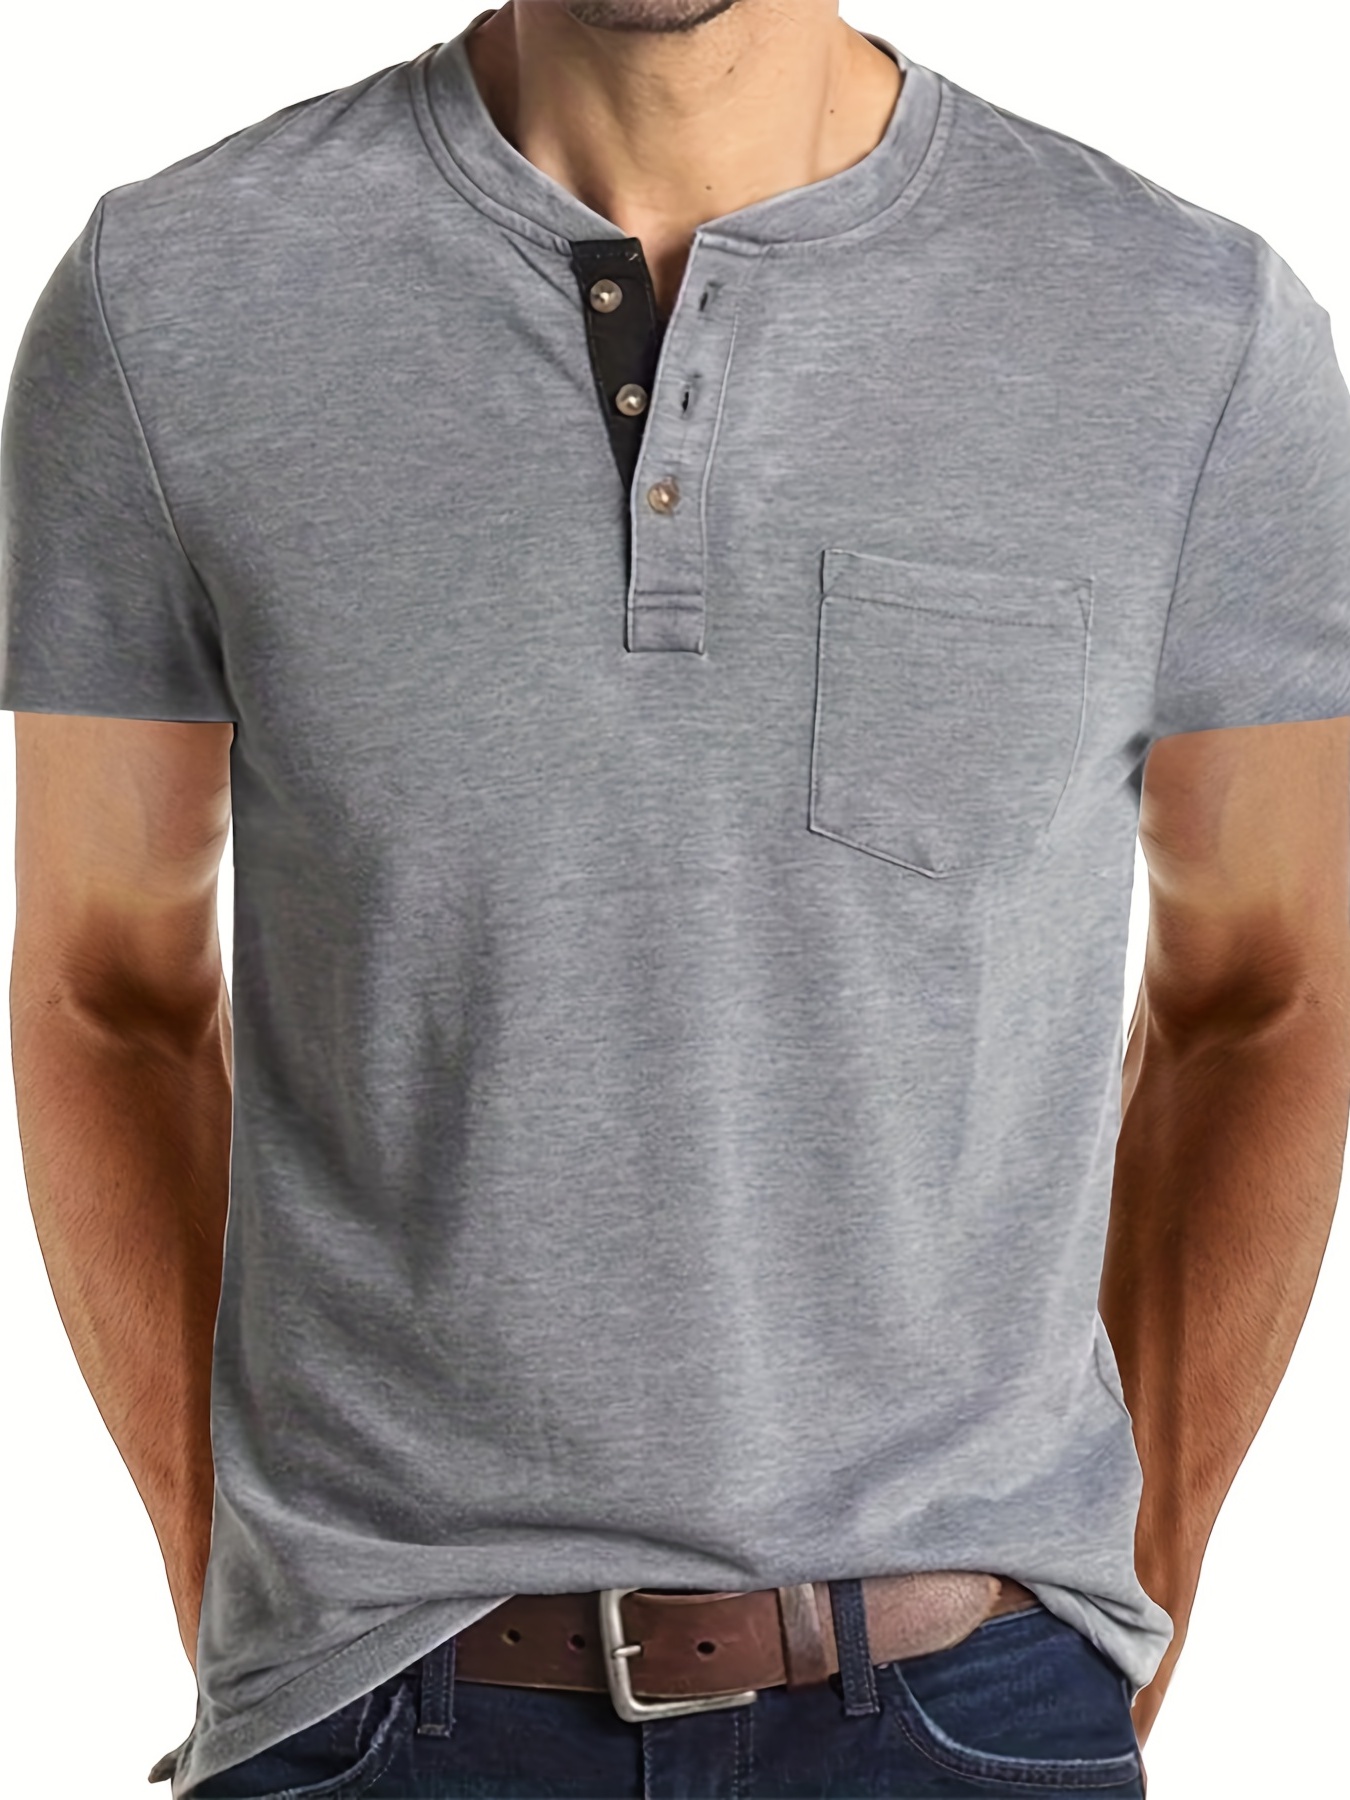 Camiseta de cuello alto para hombre, camisa de manga larga, lisa, ajustada,  informal, a rayas, talla grande 4XL-M, Otoño e Invierno